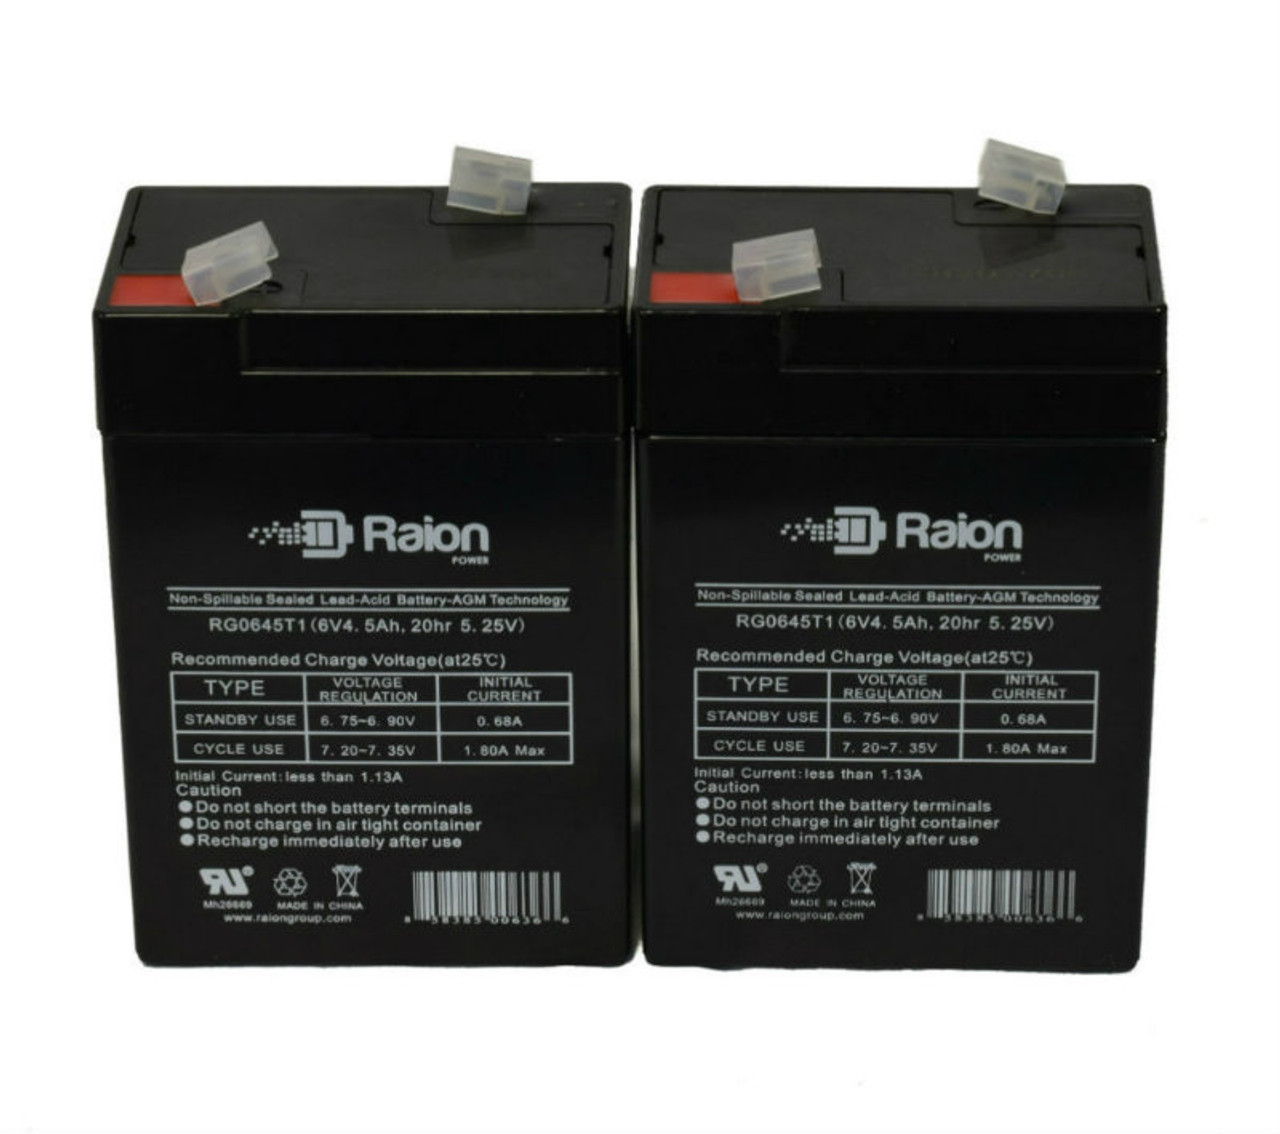 Raion Power 6V 4.5Ah Replacement Emergency Light Battery for Sentry-Lite 640 - 2 Pack